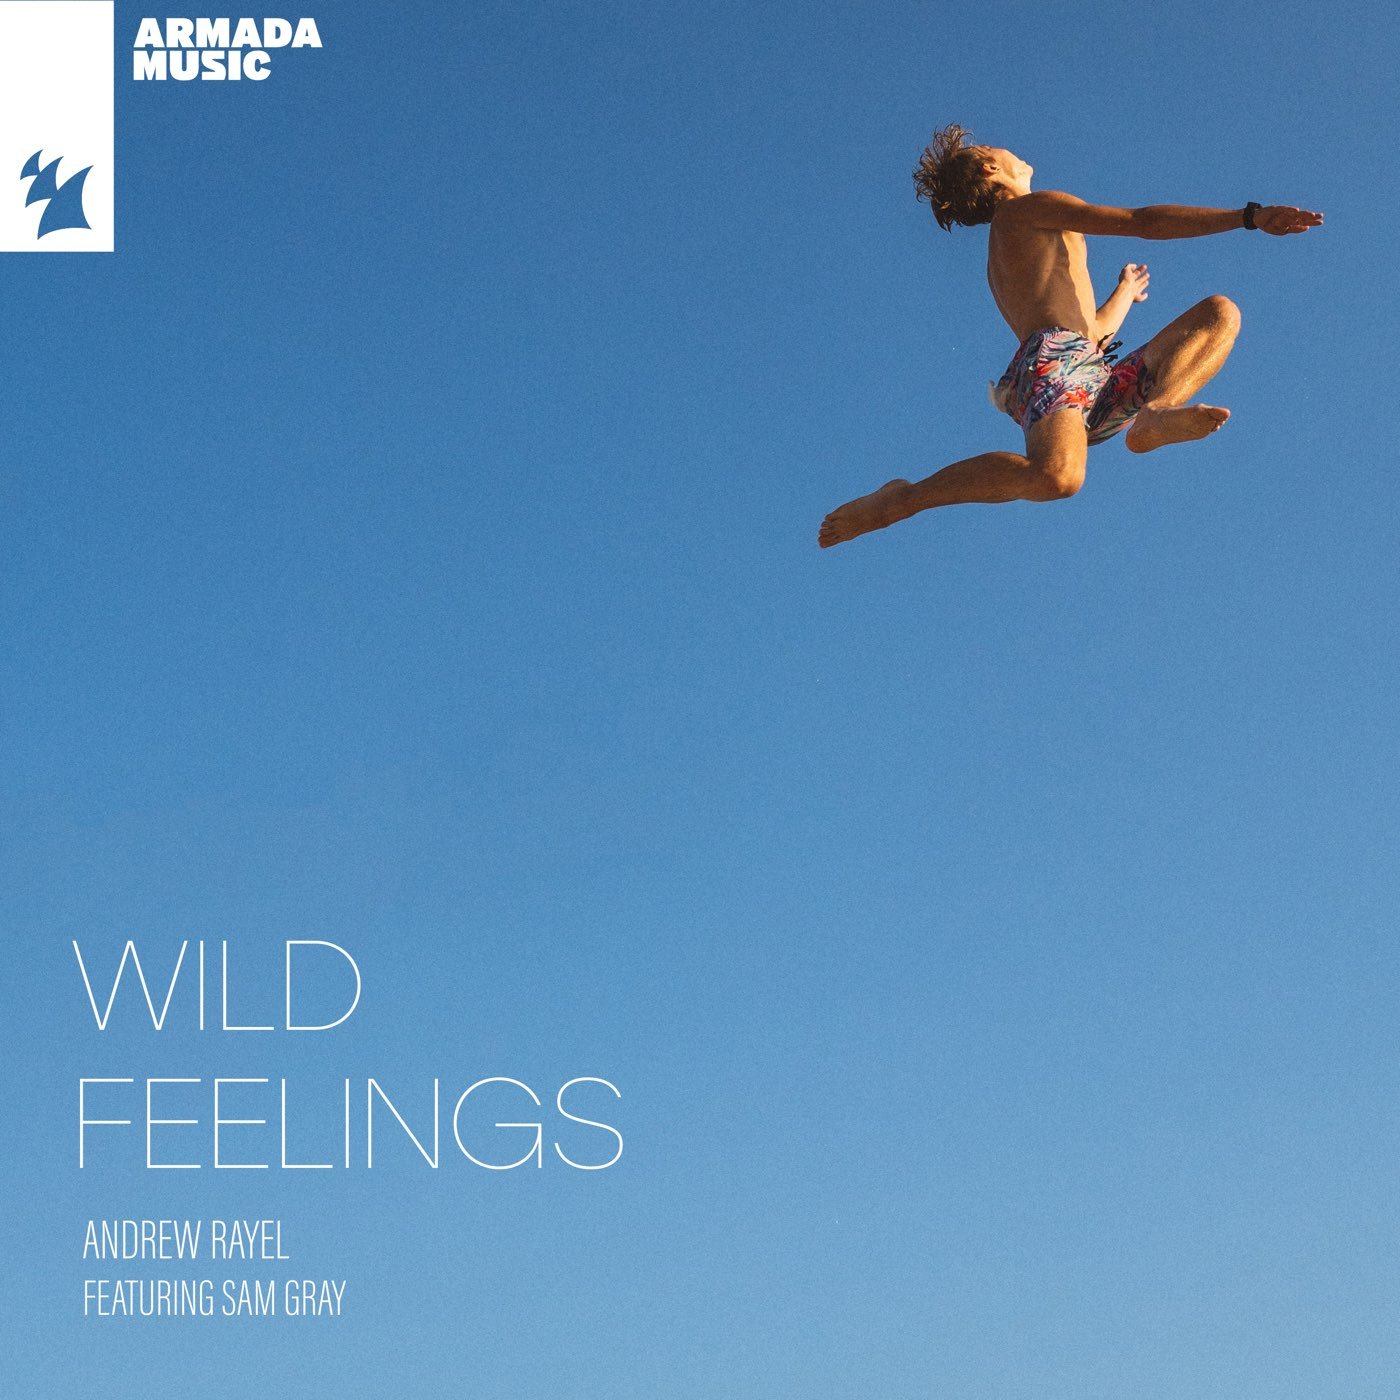 Wild feeling. Andrew Rayel. Andy Feelin. Samantha feeling fatness. Andrew Rayel & Florentin - all Falls down (feat Kyle Anson - Extended Mix).